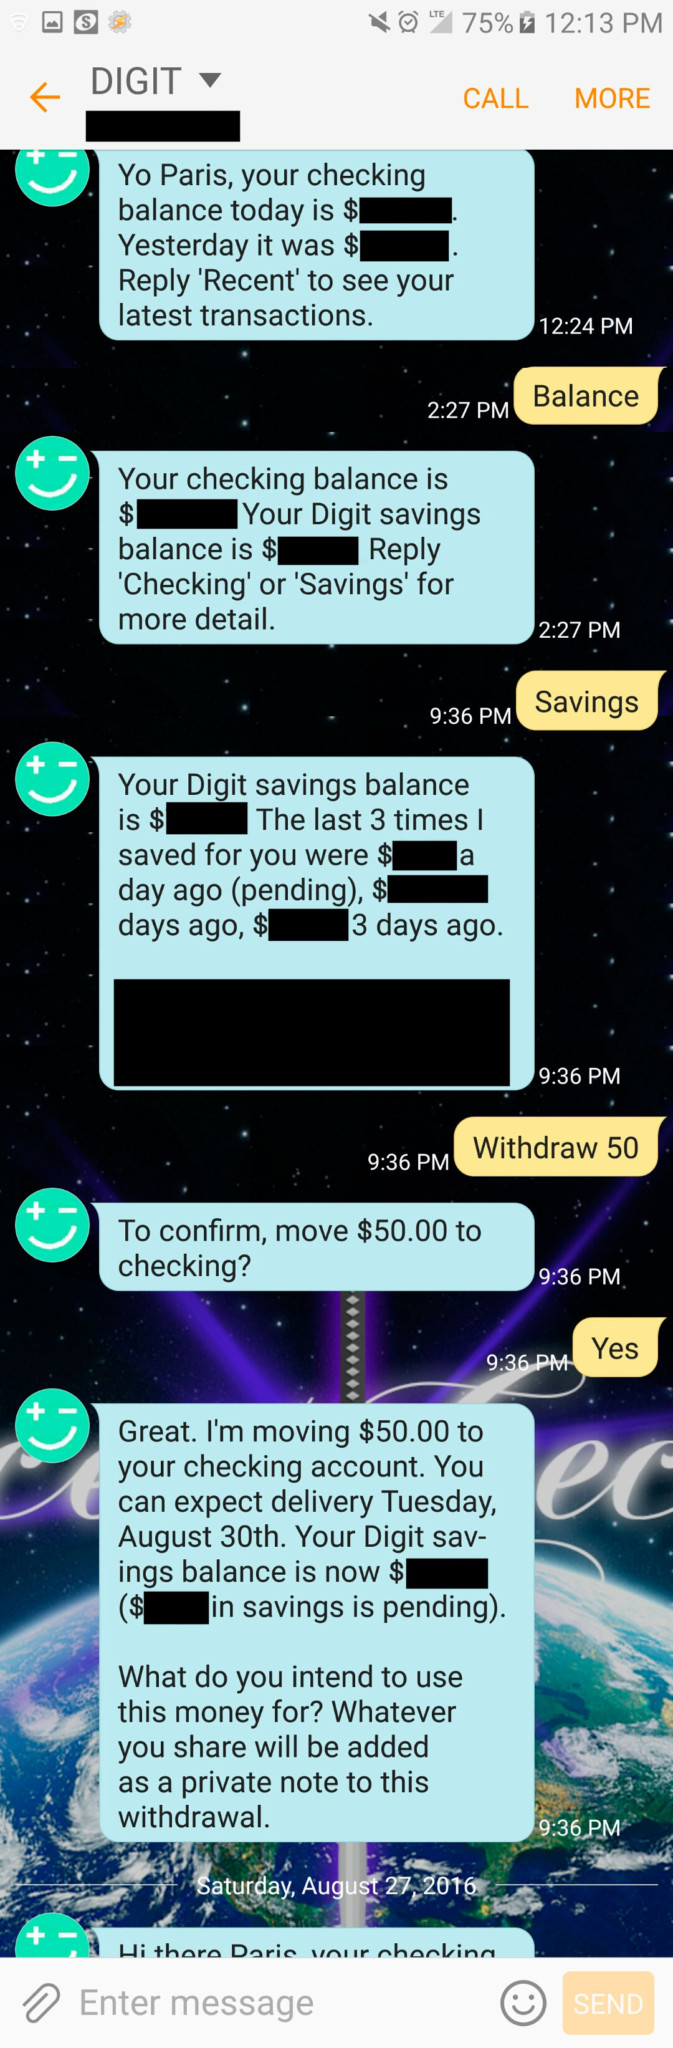 Withdrawing $50 through SMS using Digit digit vs qapital